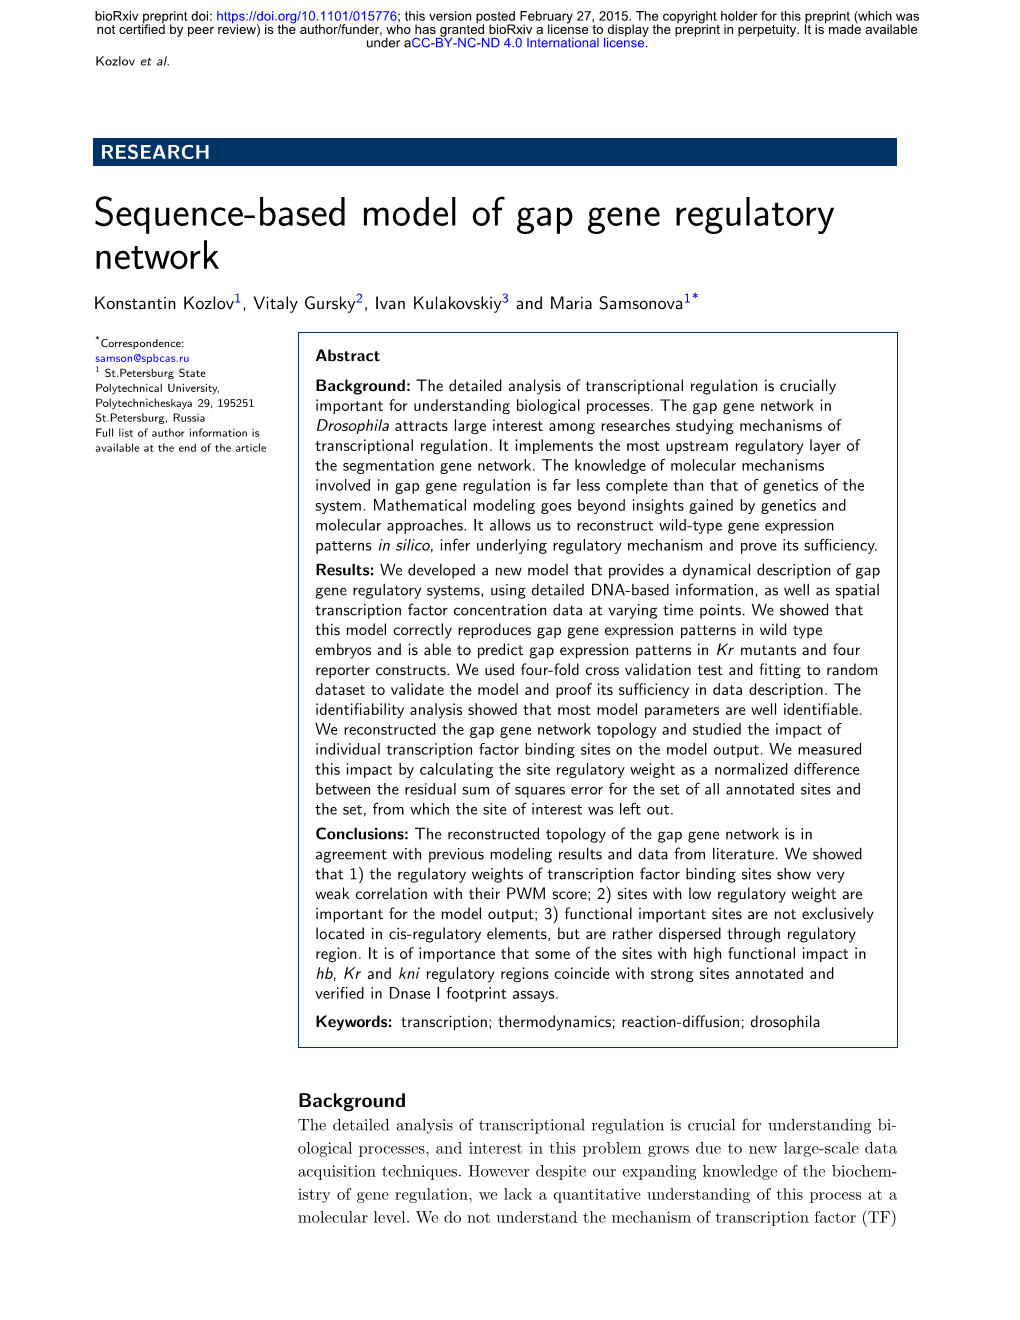 Sequence-Based Model of Gap Gene Regulatory Network Konstantin Kozlov1, Vitaly Gursky2, Ivan Kulakovskiy3 and Maria Samsonova1*